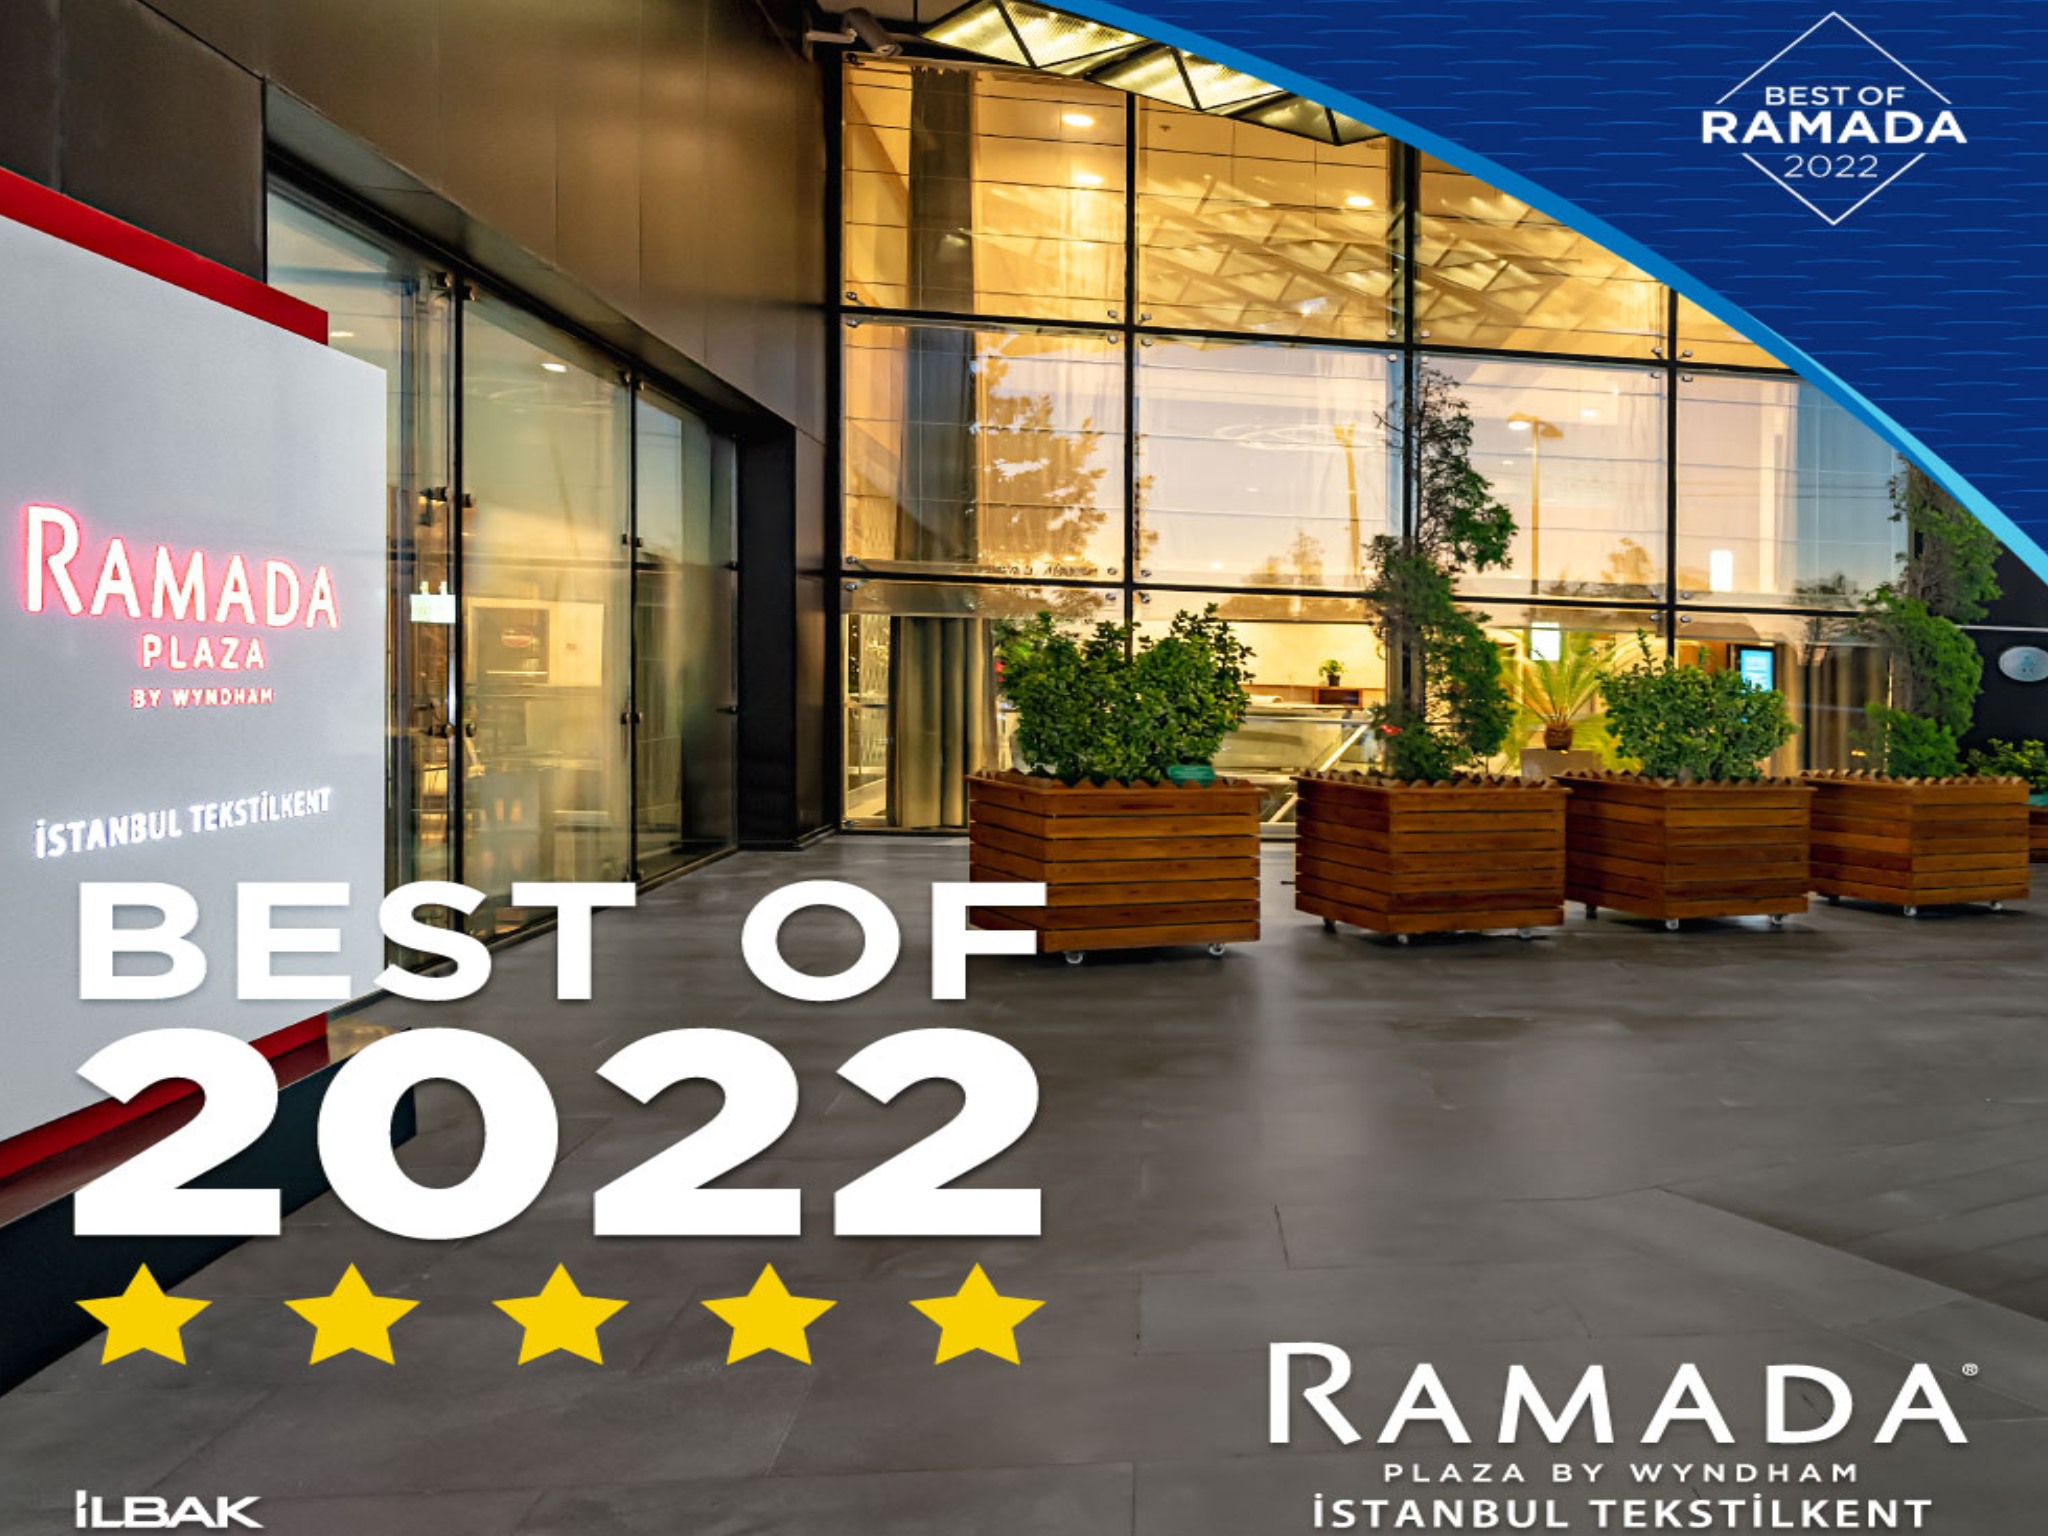 Ramada Plaza by Wyndham Istanbul Tekstilkent has received the '2022 Best of Ramada Award'